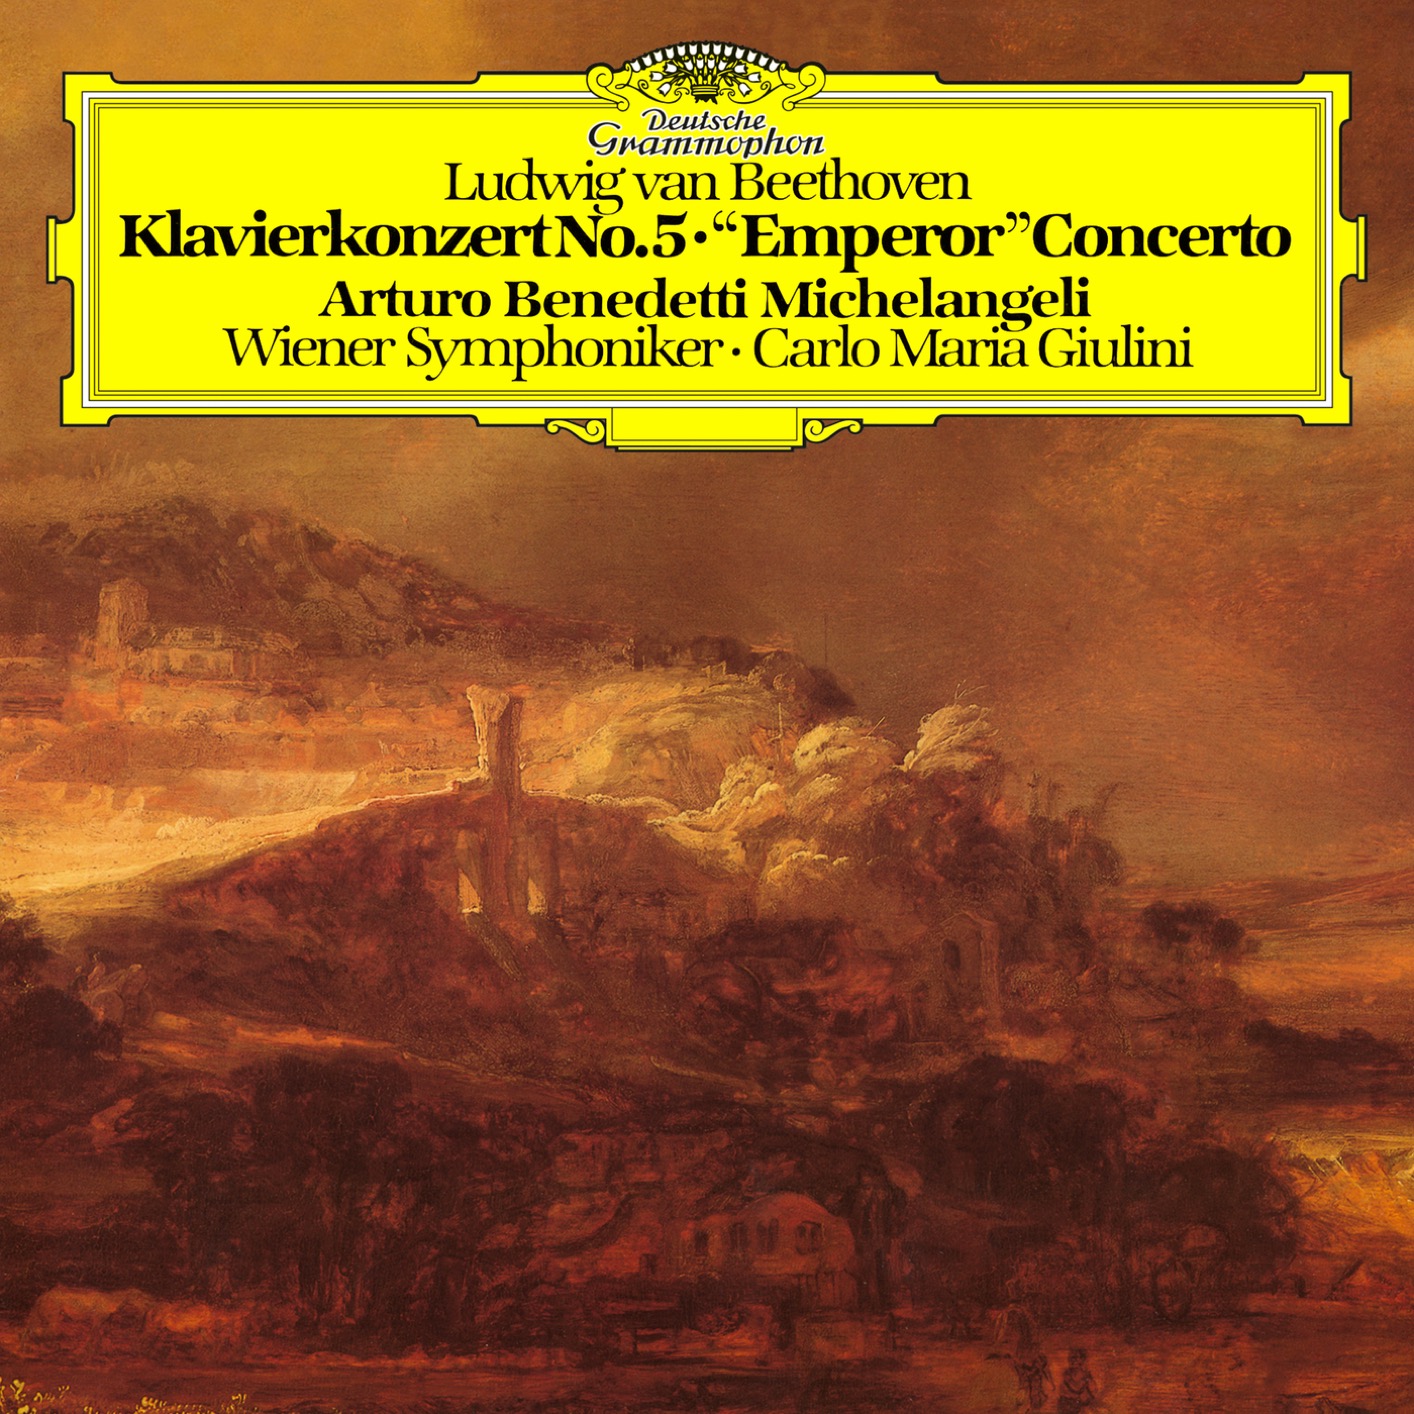 Arturo Benedetti Michelangeli, Wiener Symphoniker & Carlo Maria Giulini – Beethoven: Piano Concerto No.5 in E-Flat Major, Op. 73 (Remastered) (1982/2019) [Official Digital Download 24bit/192kHz]